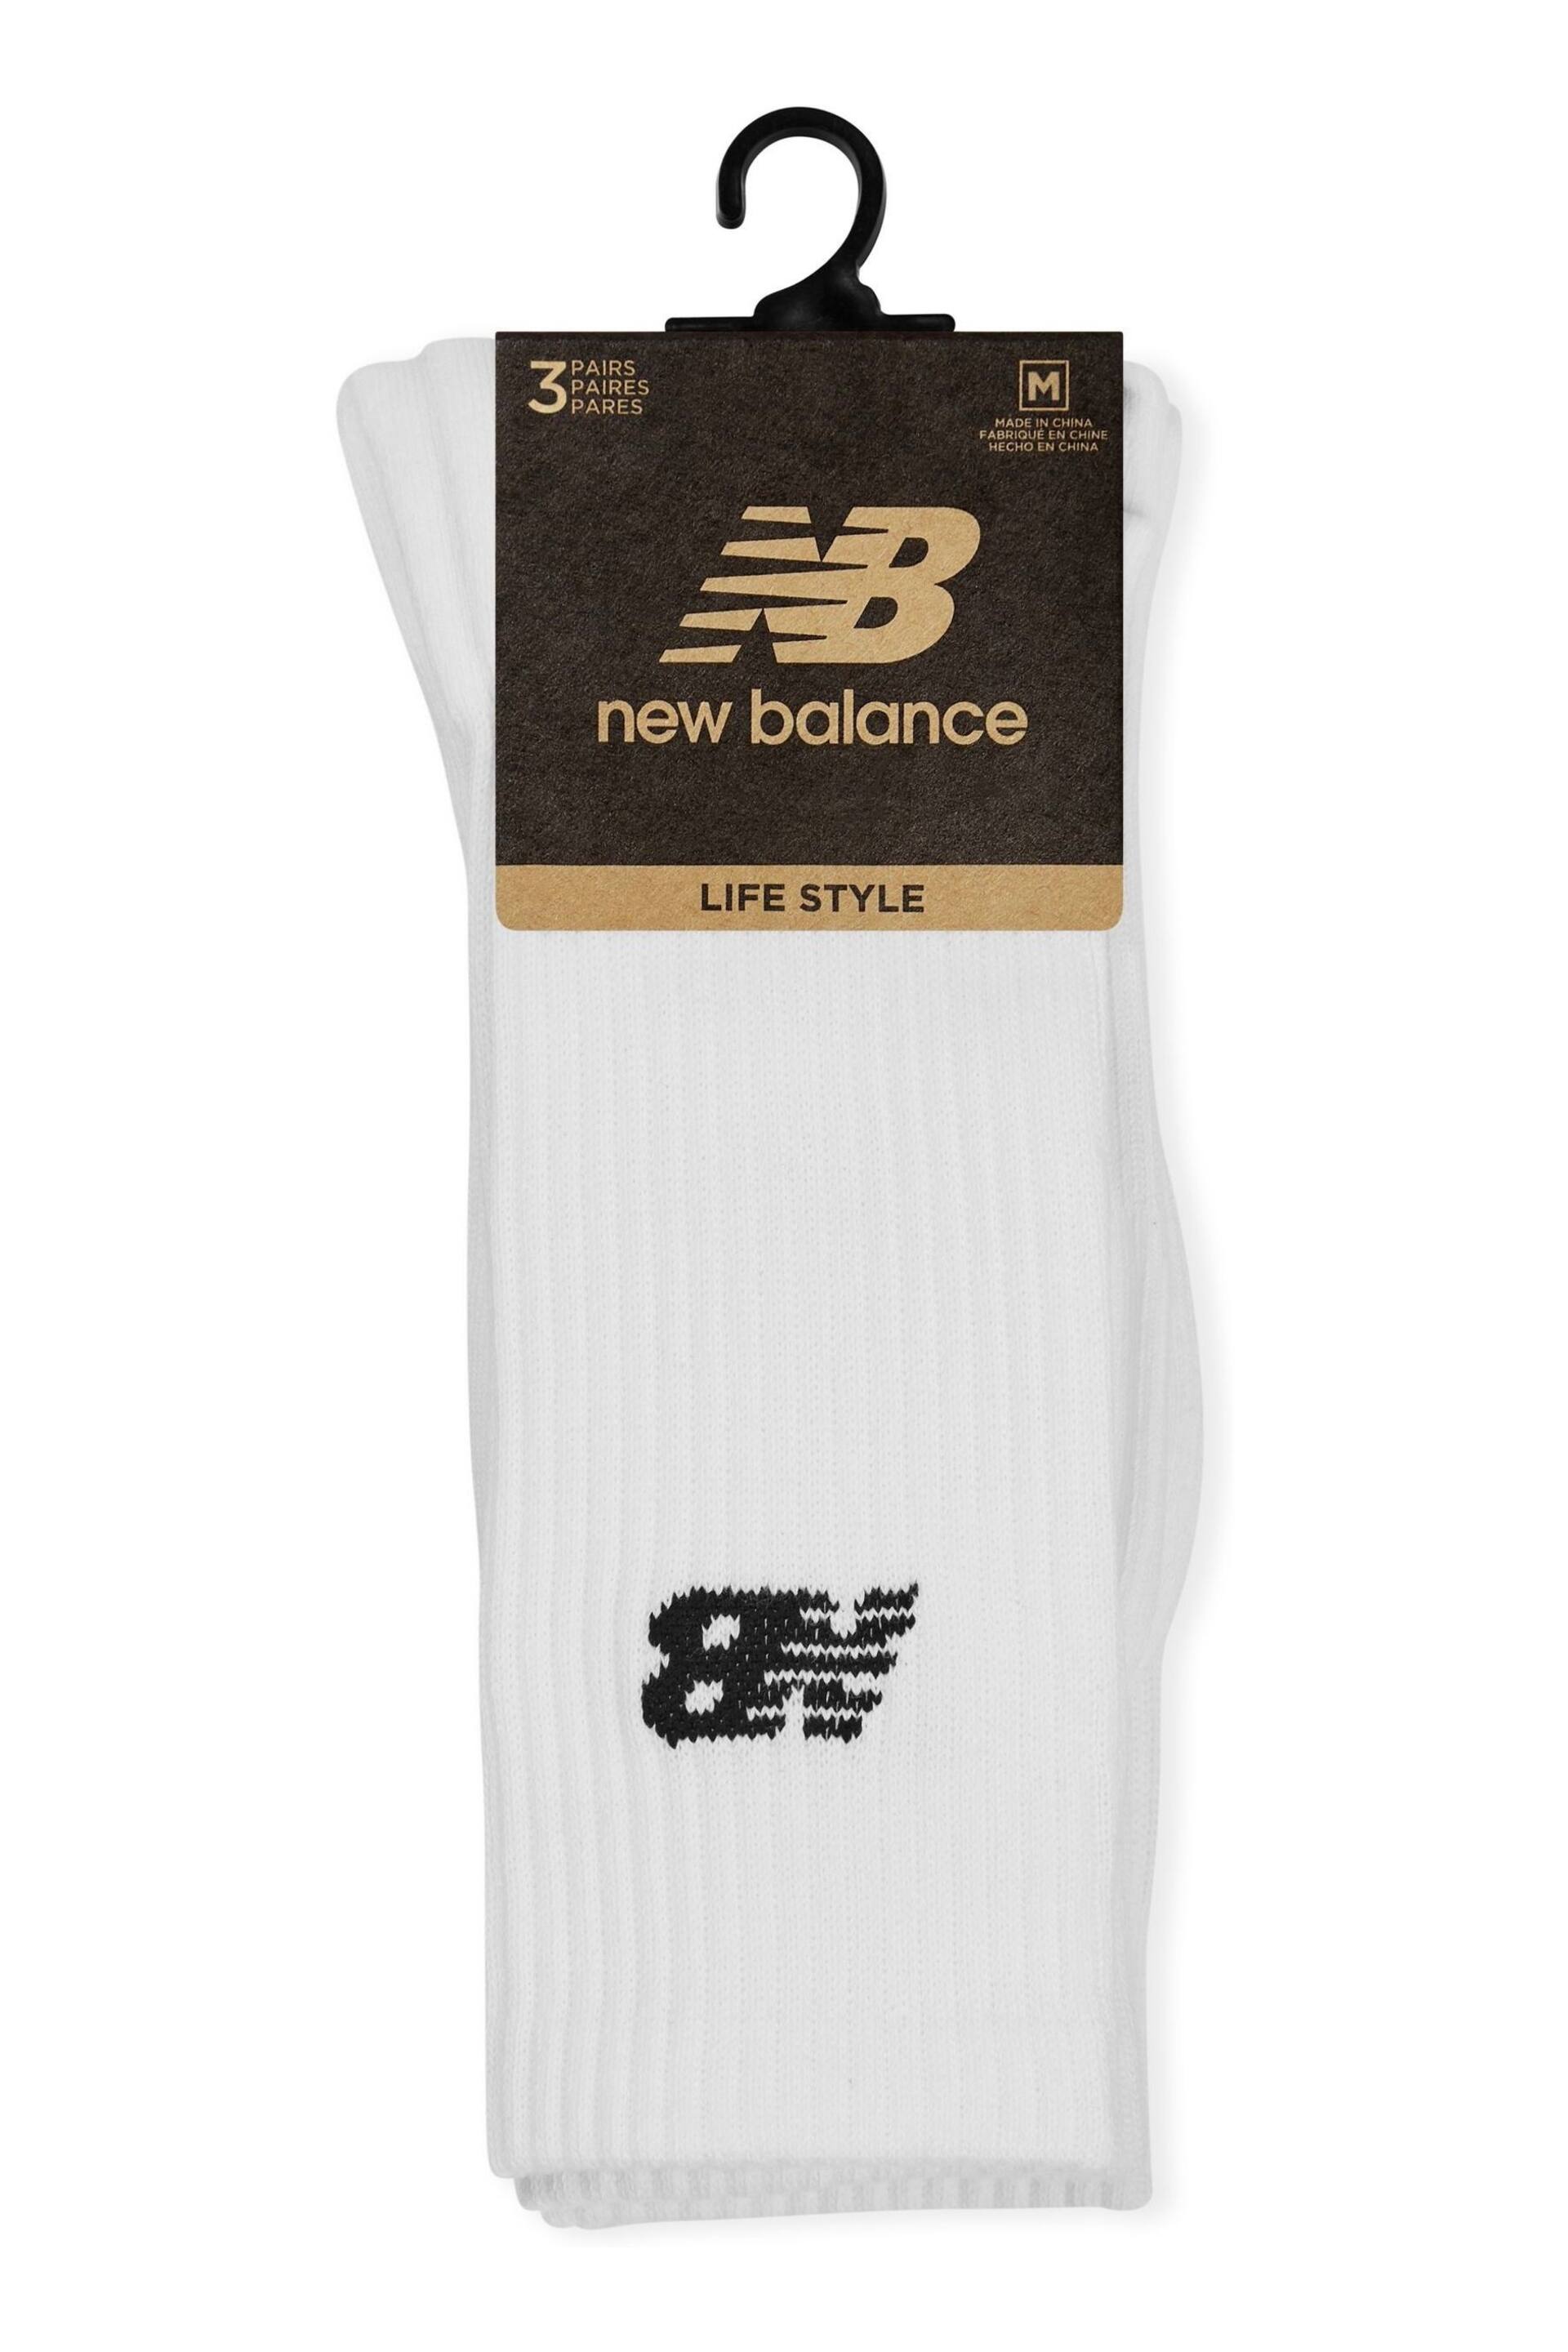 New Balance White Everyday Crew Socks - Image 3 of 3